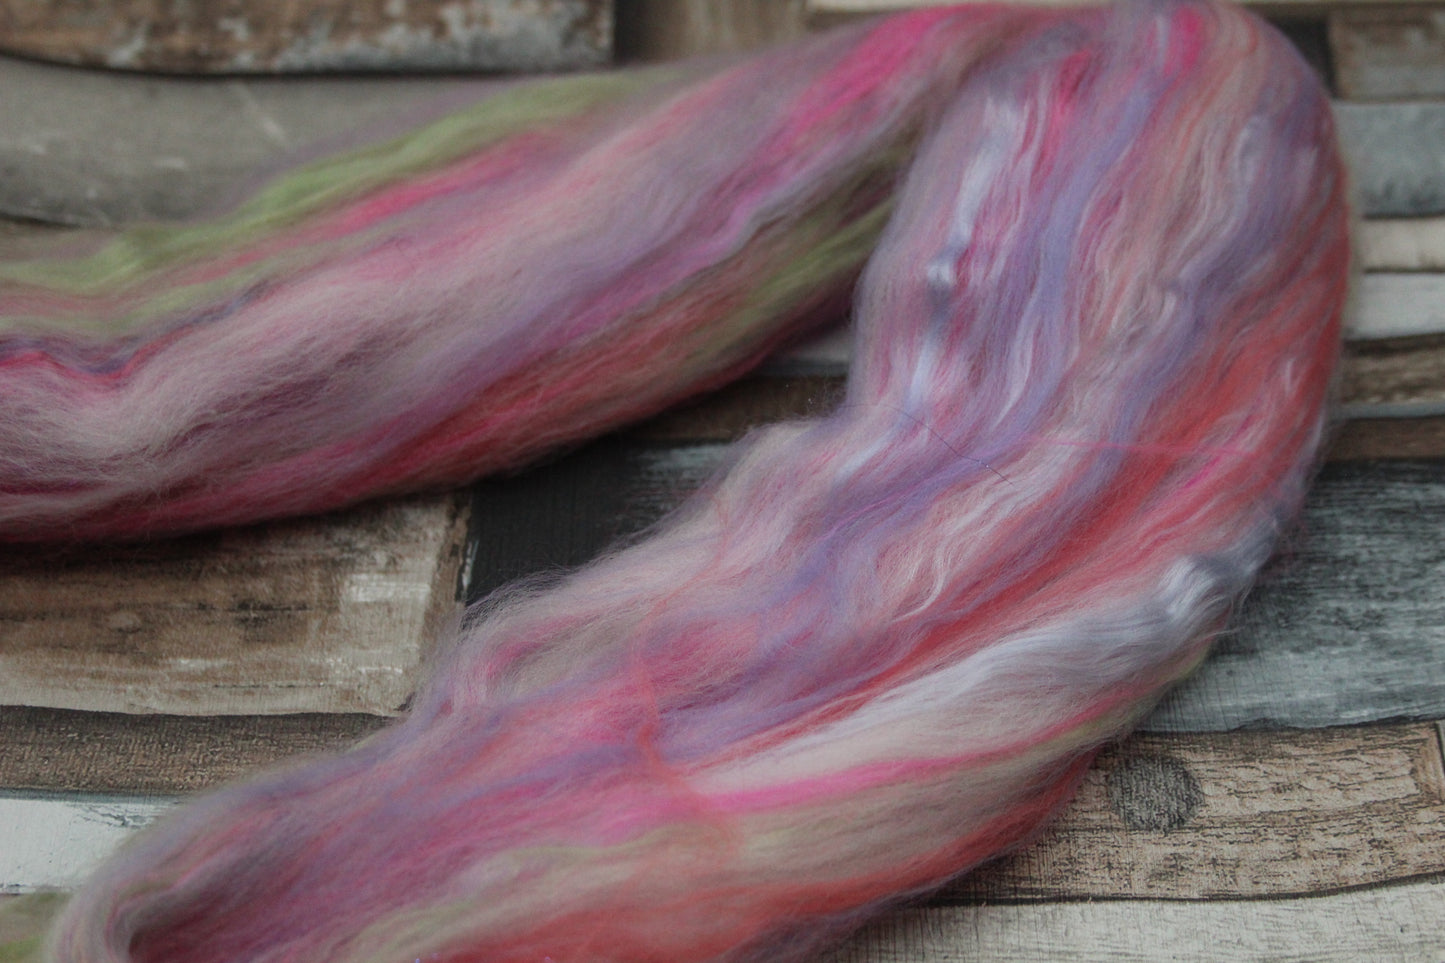 Merino Wool Blend - Purple Pink - 21 grams / 0.7 oz  - Fibre for felting, weaving or spinning